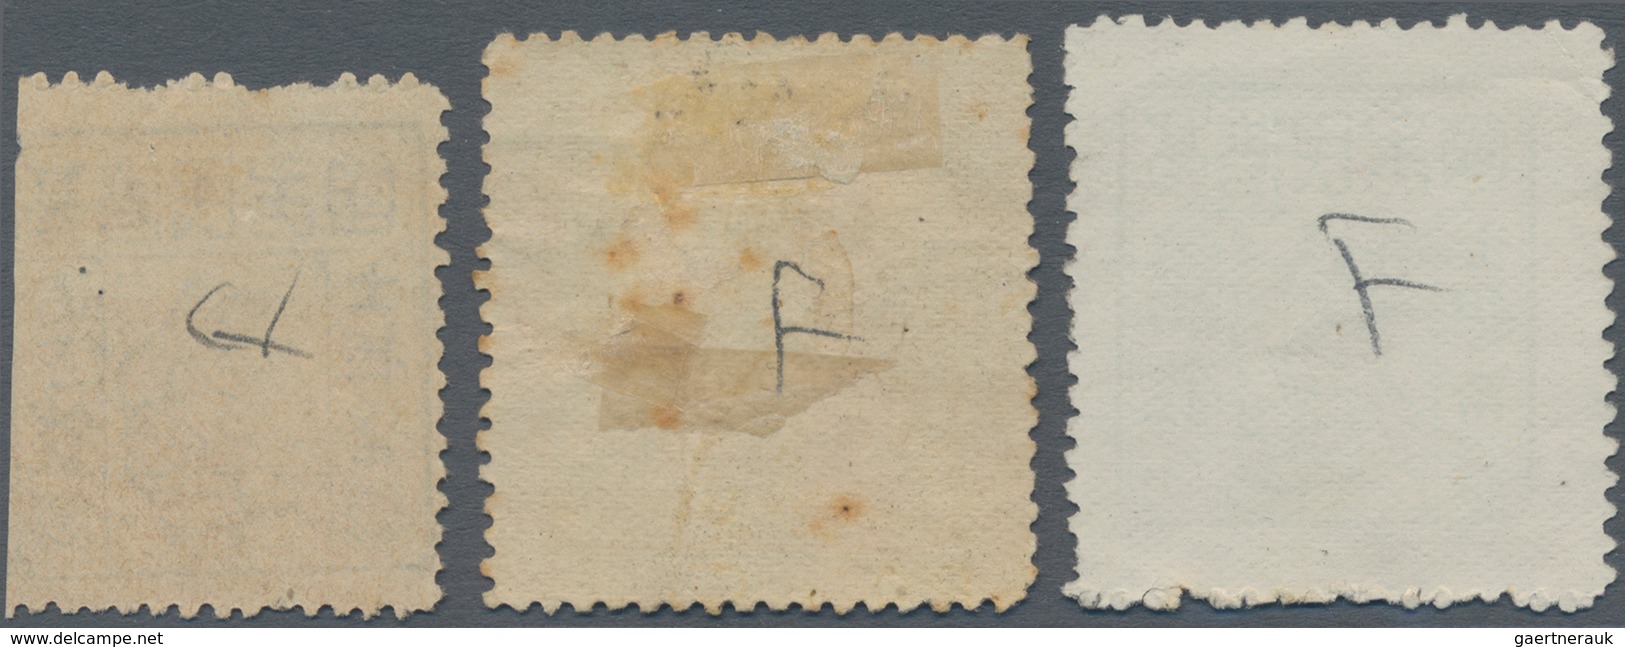 China - Taiwan (Formosa): 1895, Black Flag Republic Issues Die III Accumulation Mint No Gum As Issue - Oblitérés